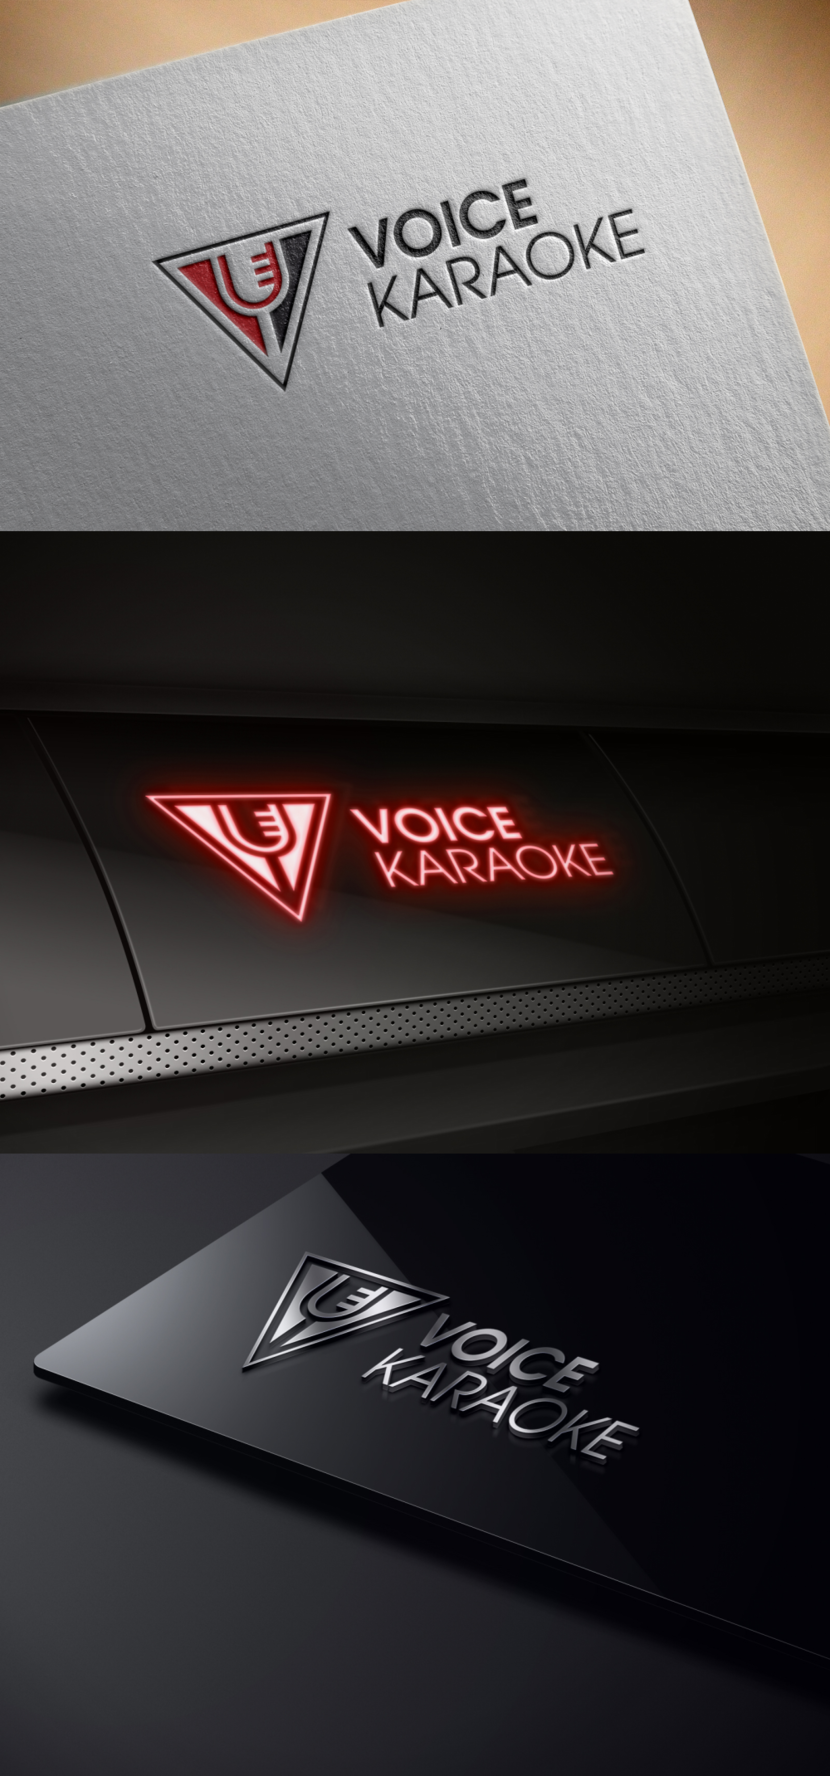 V+МИКРОФОН - Логотип для караоке Voice